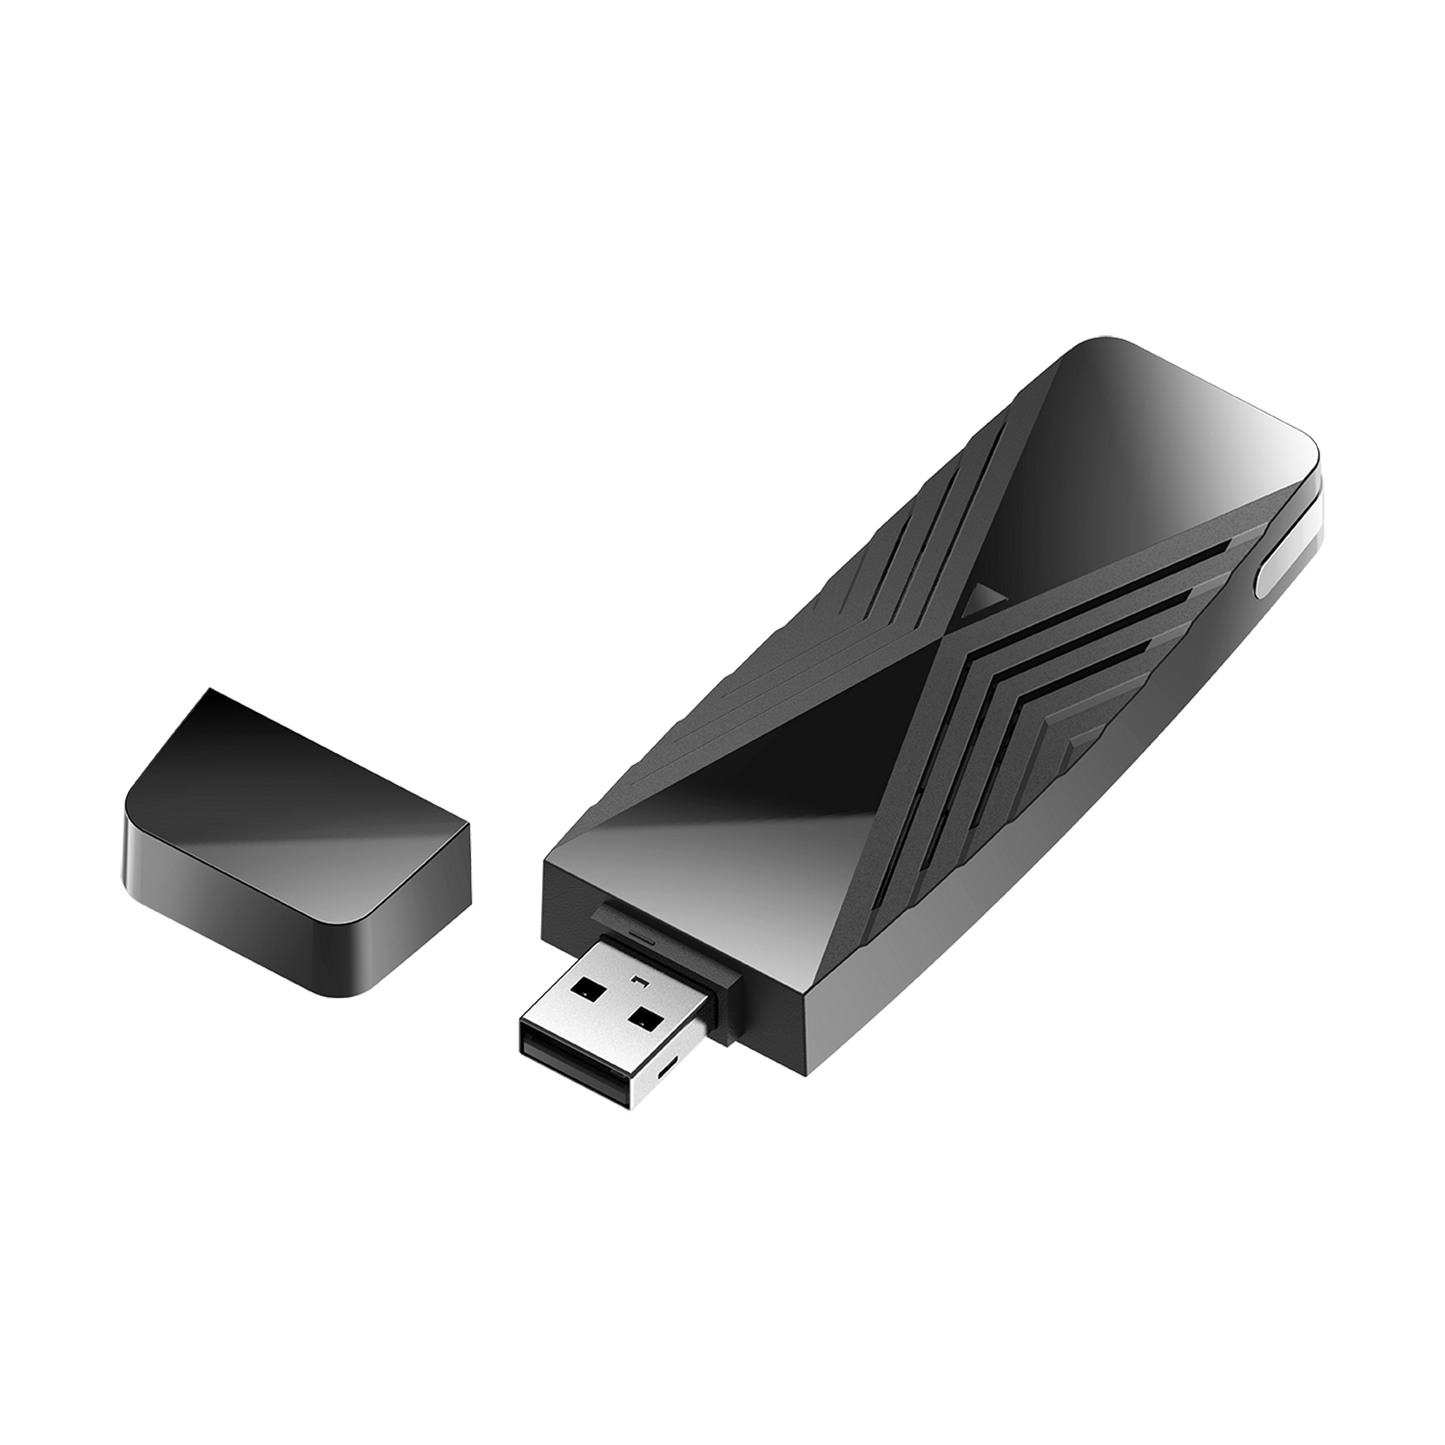 DWA-X1850 | AX1800 Wi-Fi 6 USB Adapter with Cradle